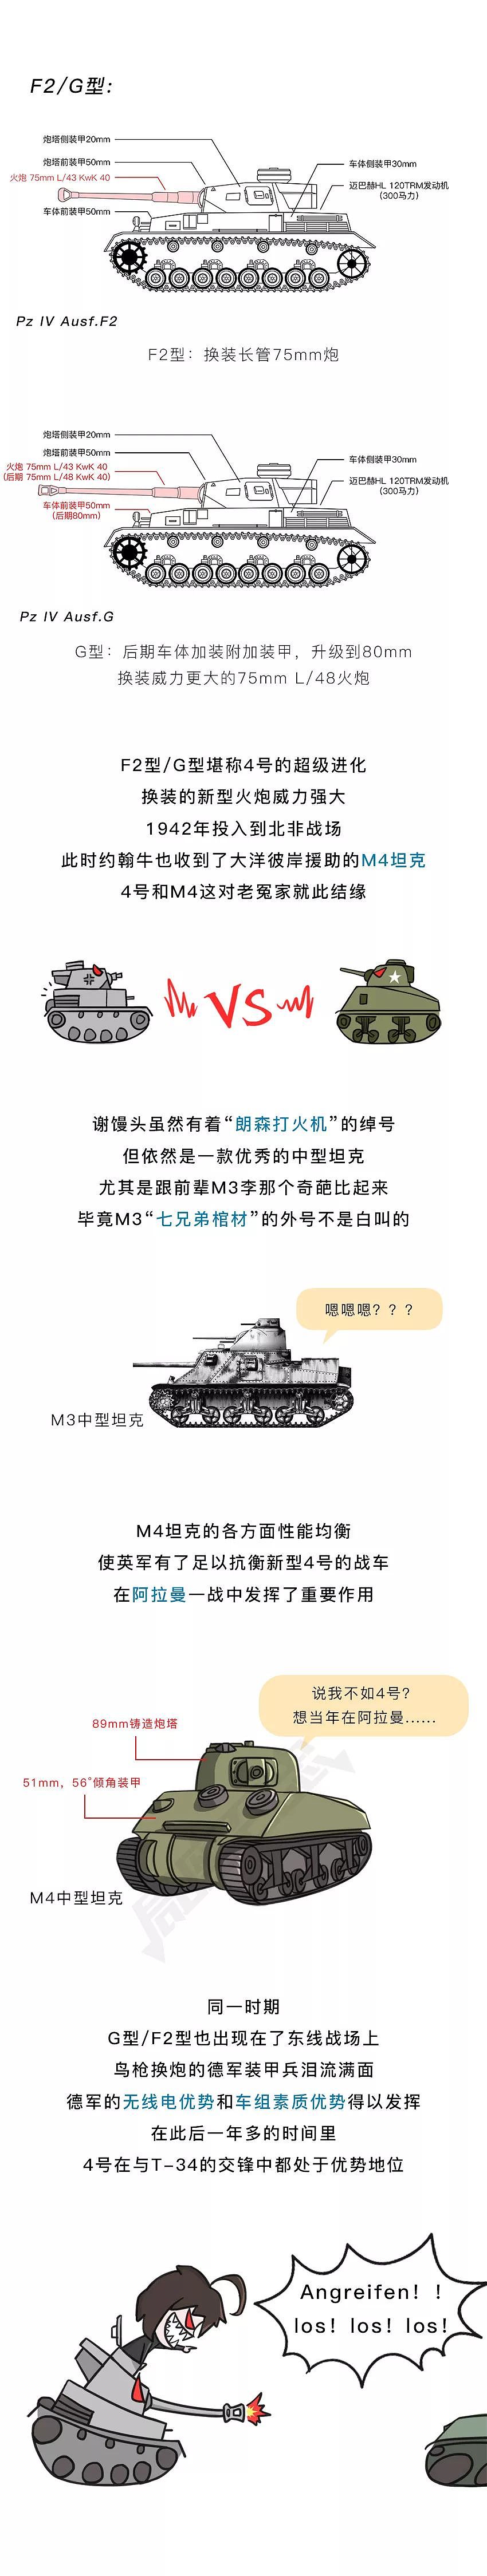 T-34“头号死敌”，4号坦克战斗力有多强？ | 局漫 - 7